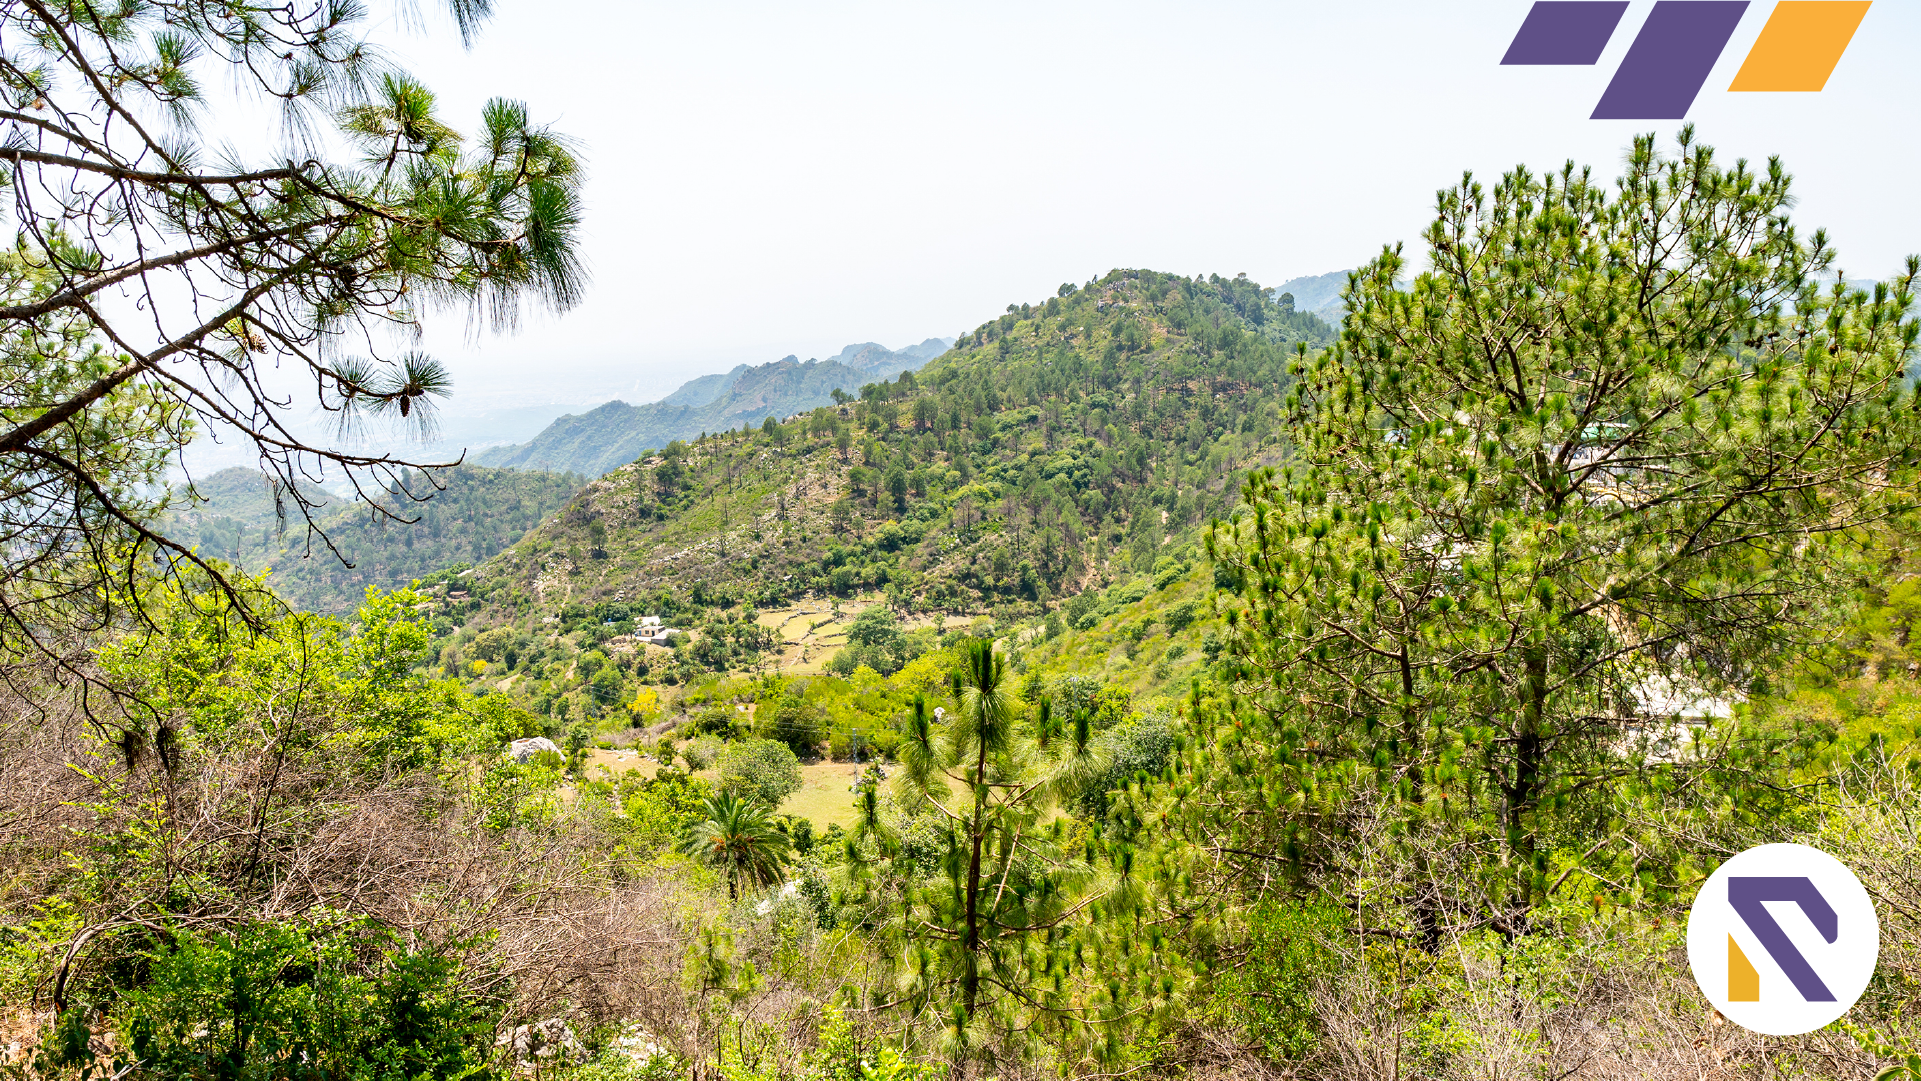 CDA demarcates the limits of the Margalla Hills National Park.